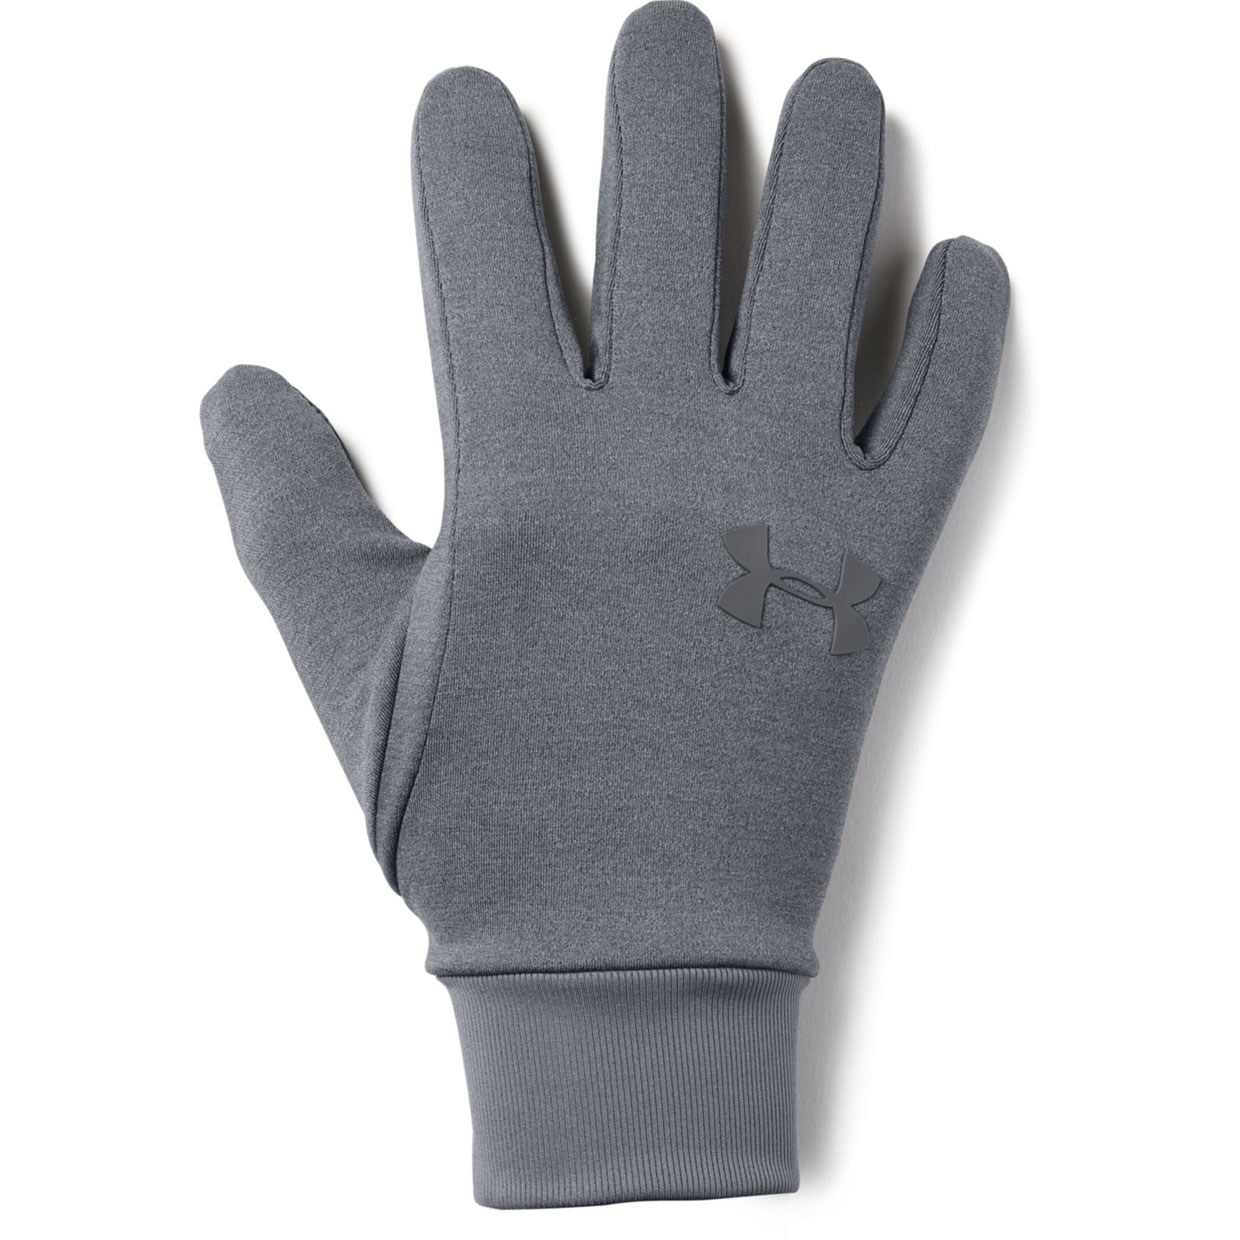 Мужские перчатки Under Armour Armour ® Liner 2.0 1318546-035